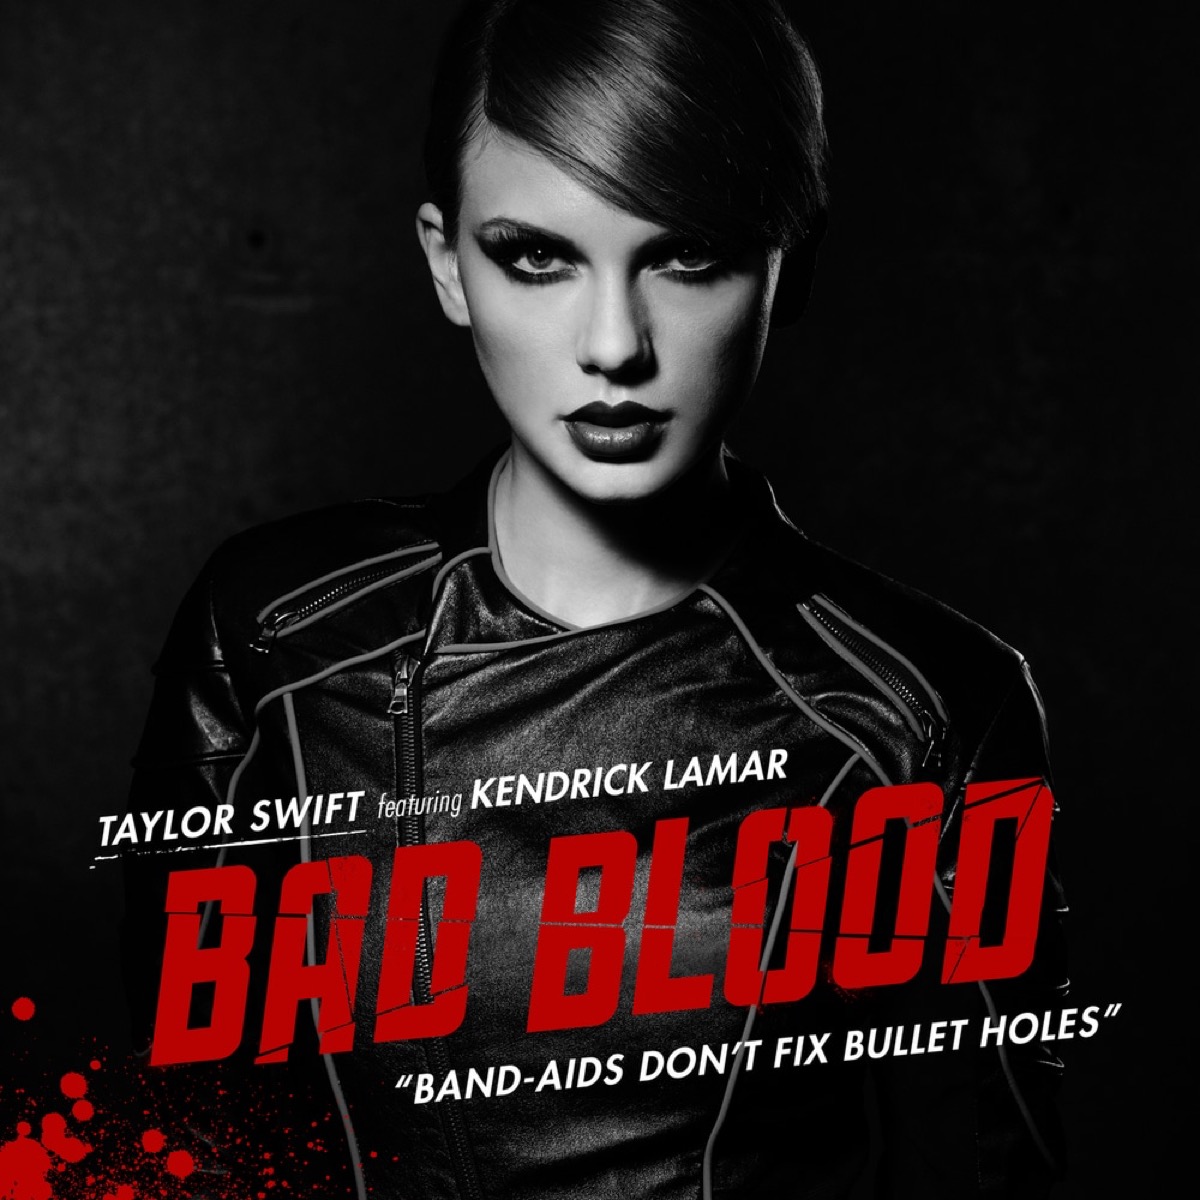 Taylor Swift ft. Kendrick Lamar "Bad Blood" single cover